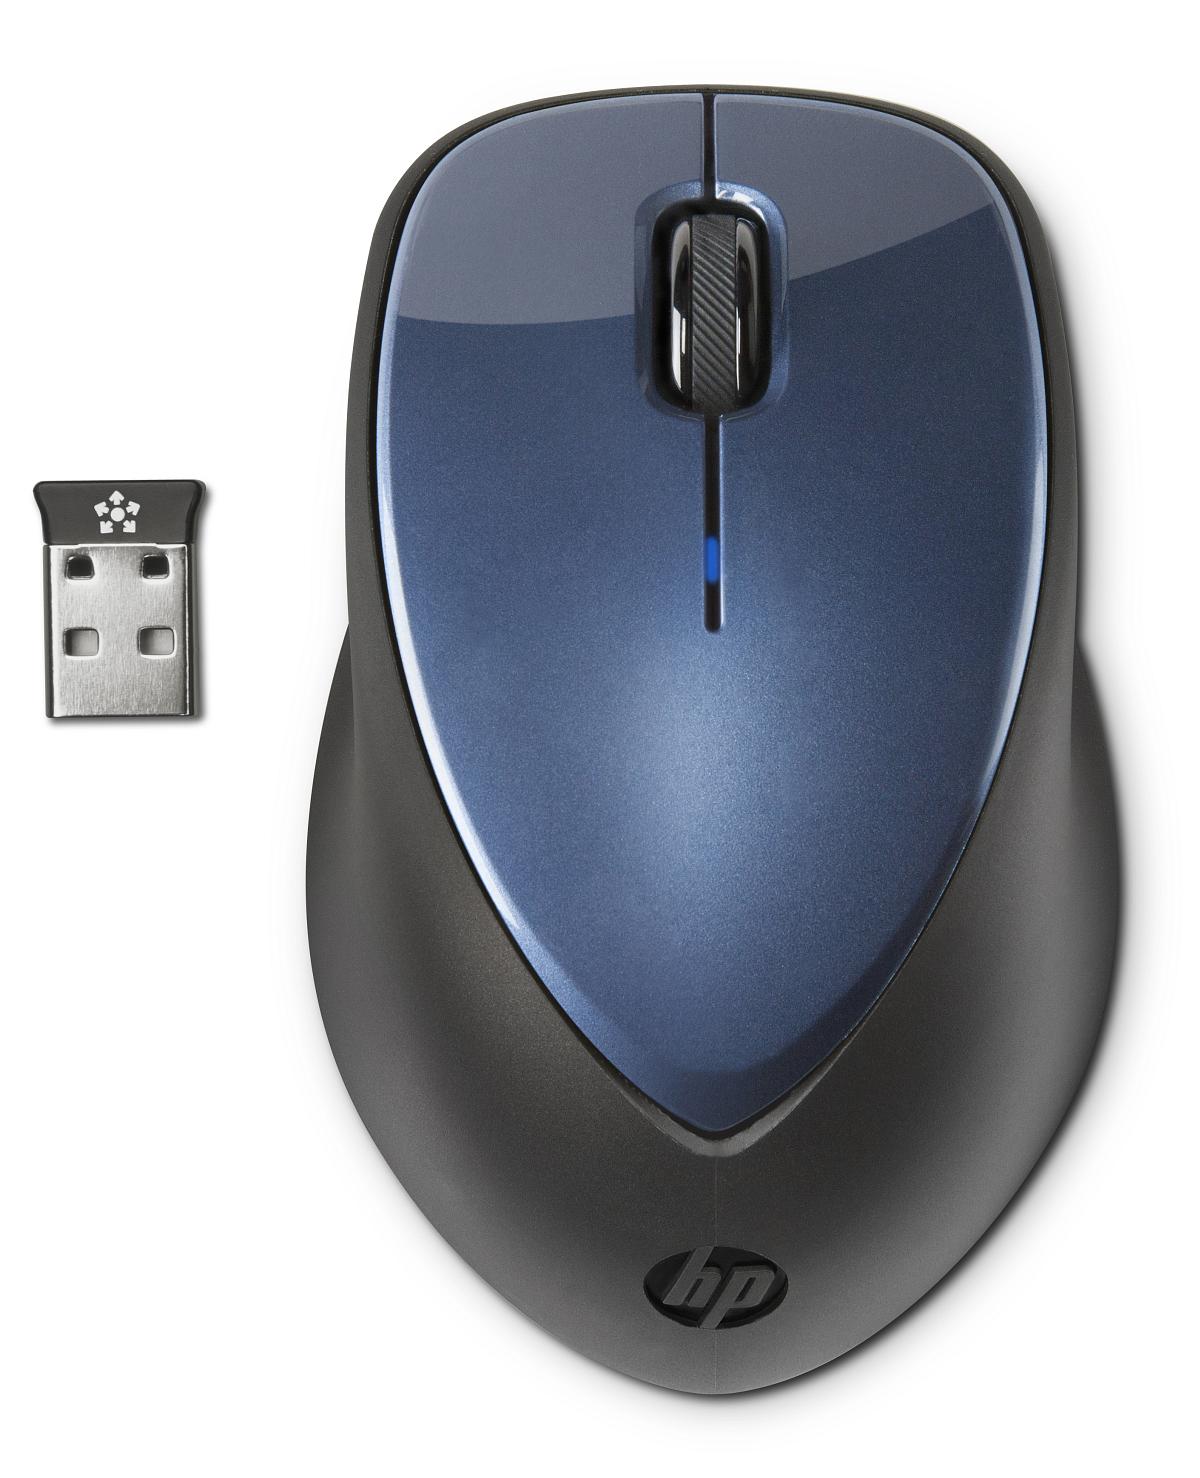 Bezdrátová myš HP x4000 - modrá (H1D34AA)